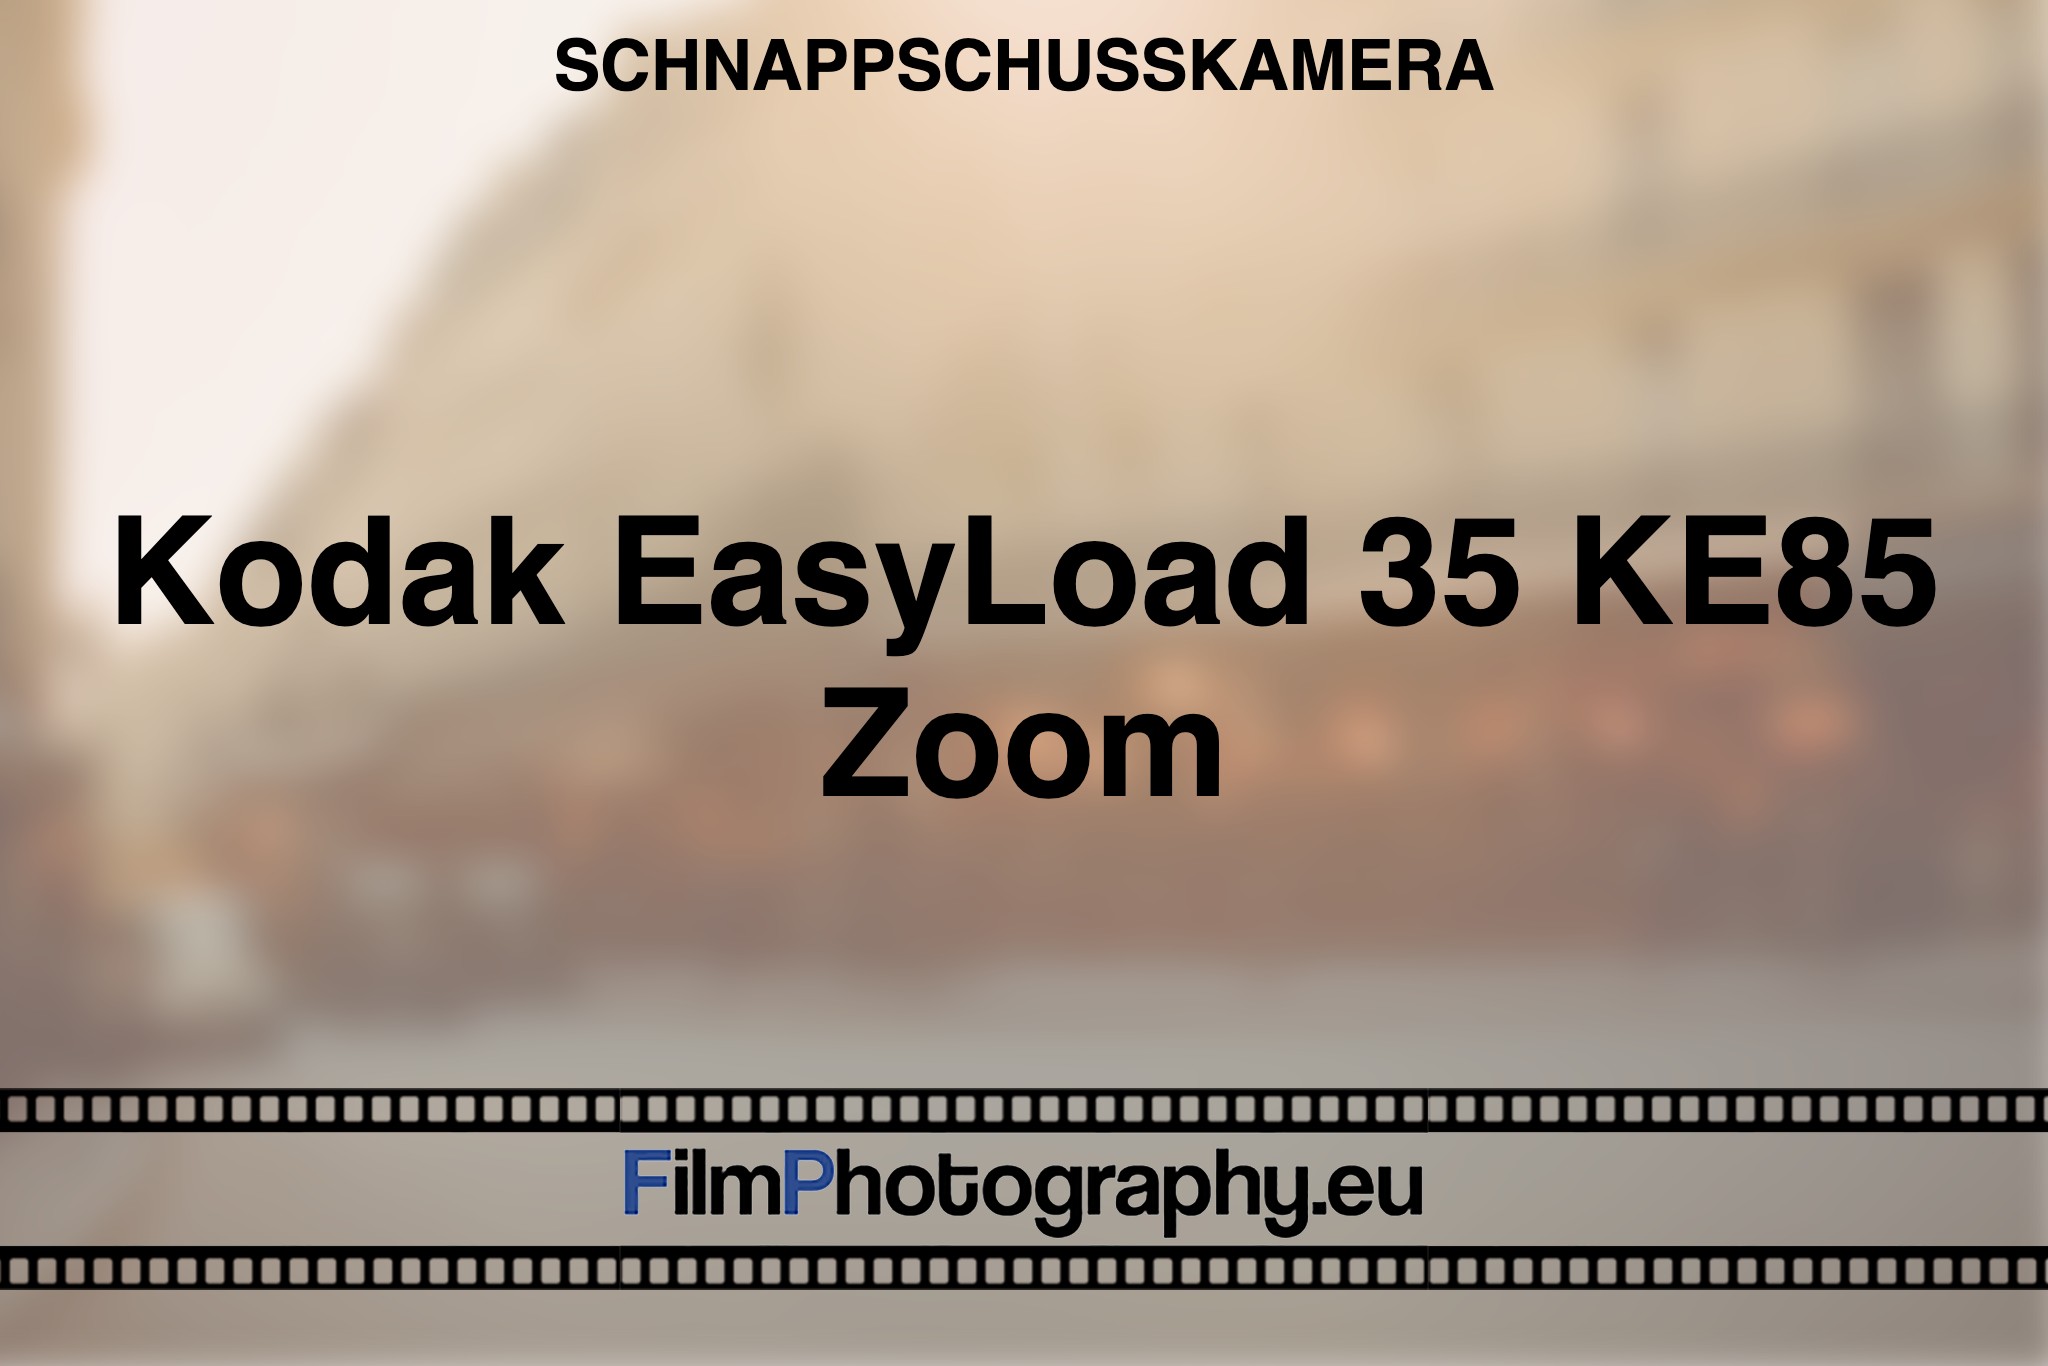 kodak-easyload-35-ke85-zoom-schnappschusskamera-bnv